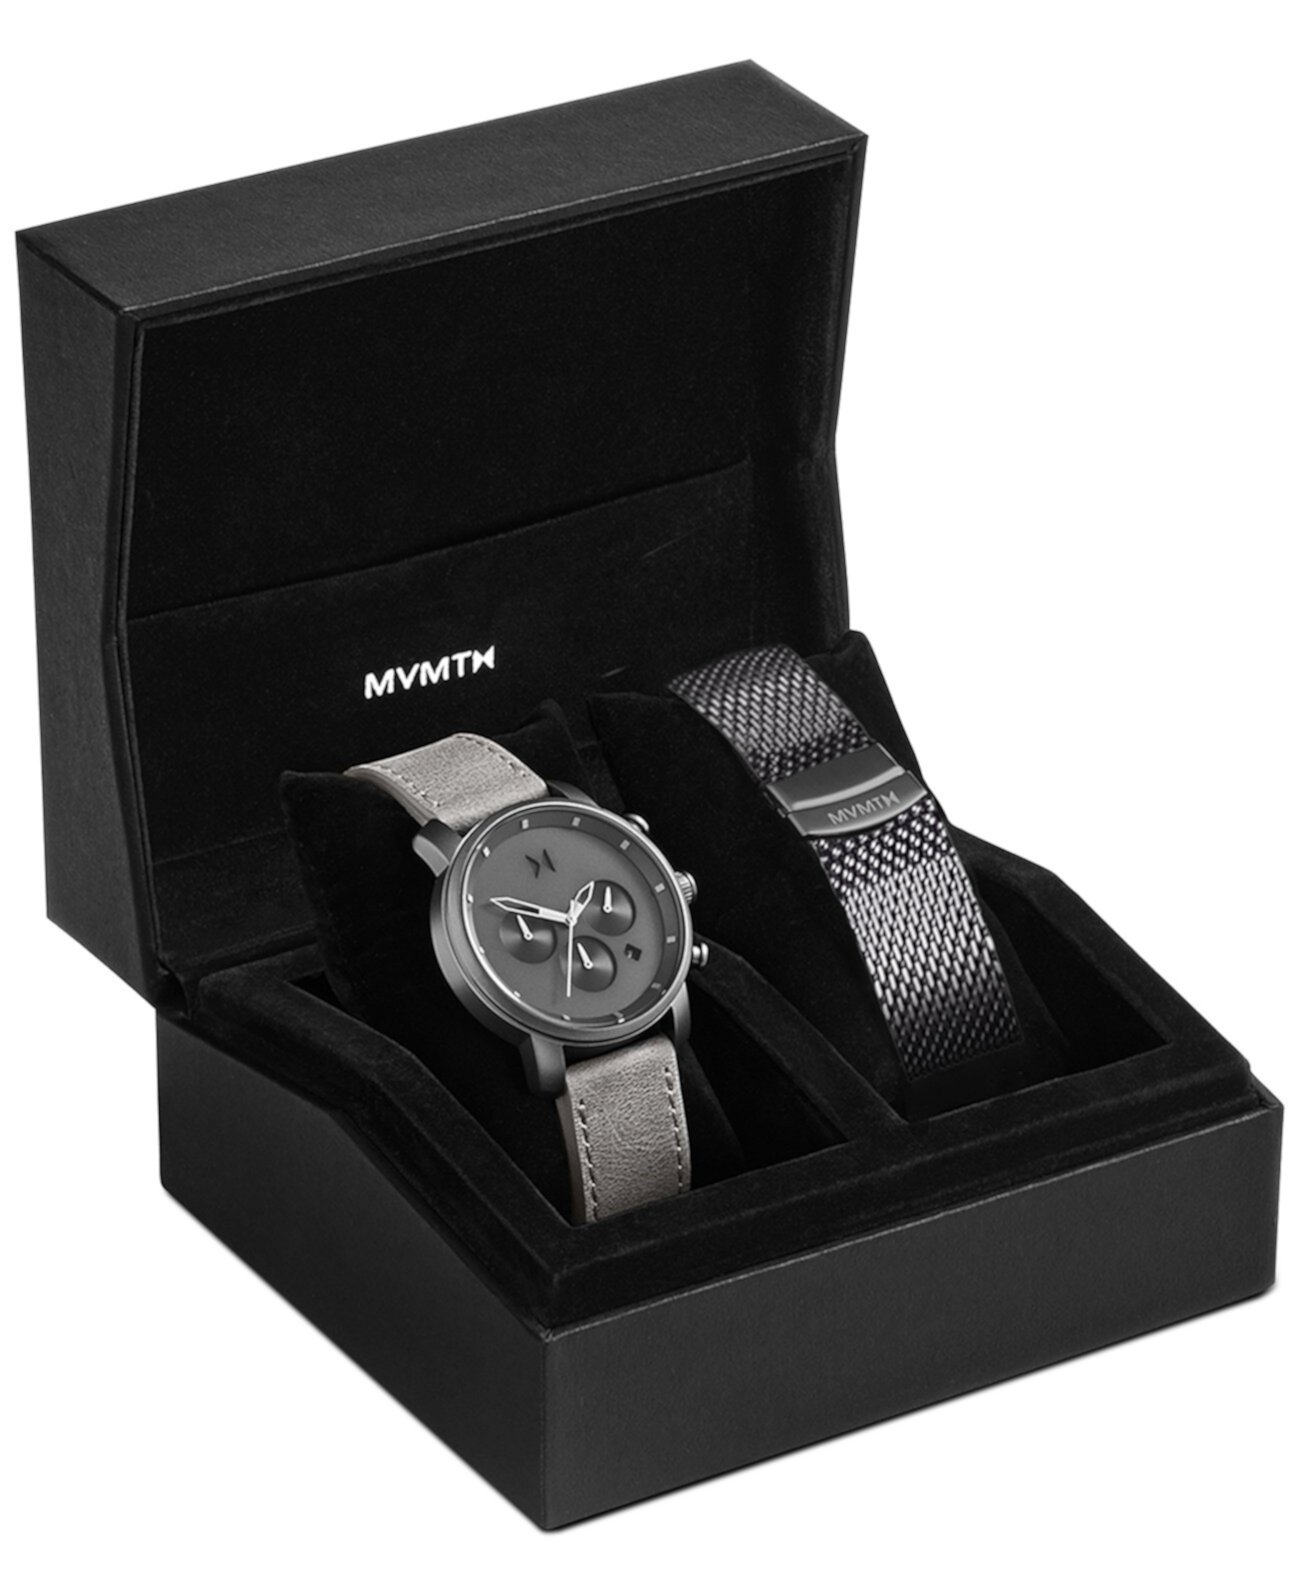 Мужские наручные часы Chrono 40 Monochrome с асфальтовым кожаным ремешком, 40 мм MVMT